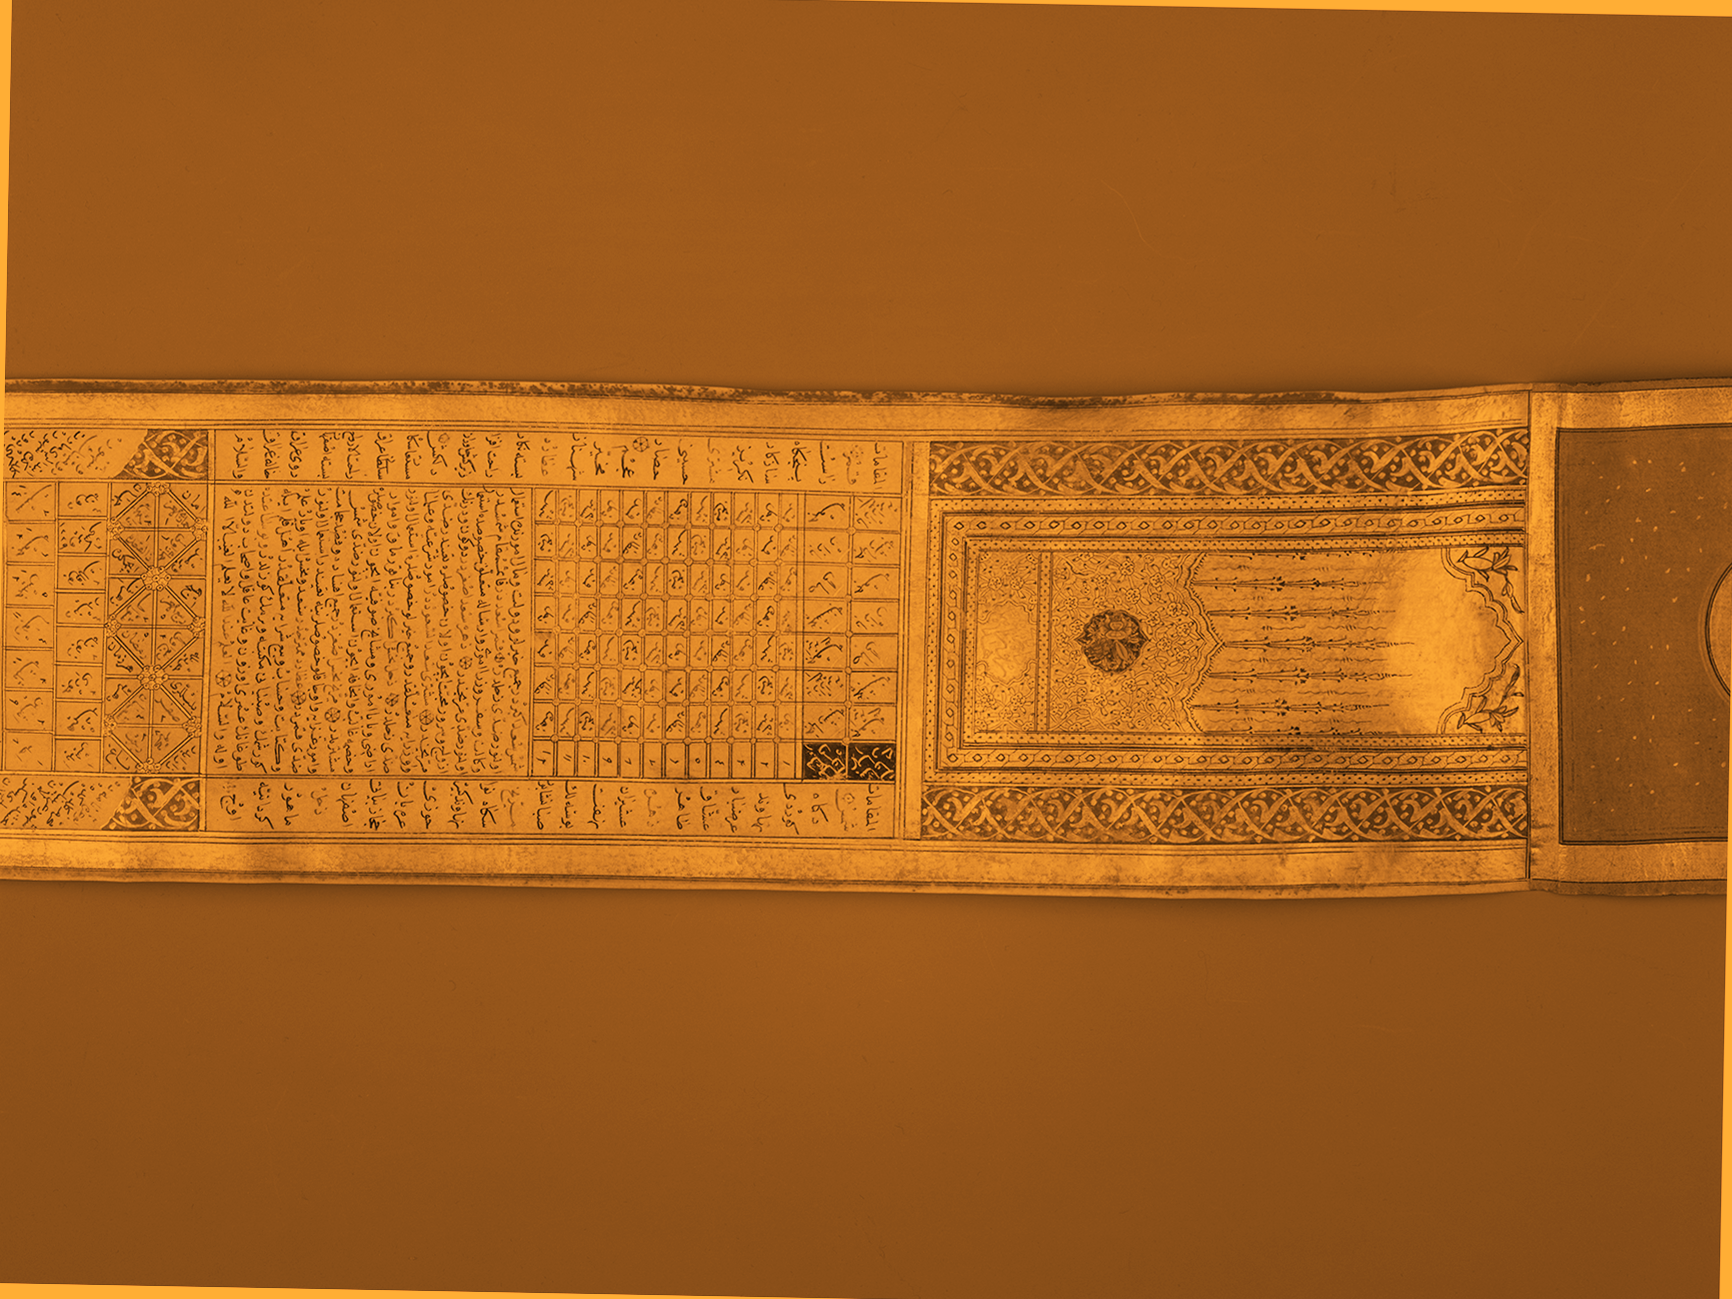 Katib - Louis E. and Theresa S. Seley Purchase Fund for Islamic Art, 1990 © Metropolitan Museum